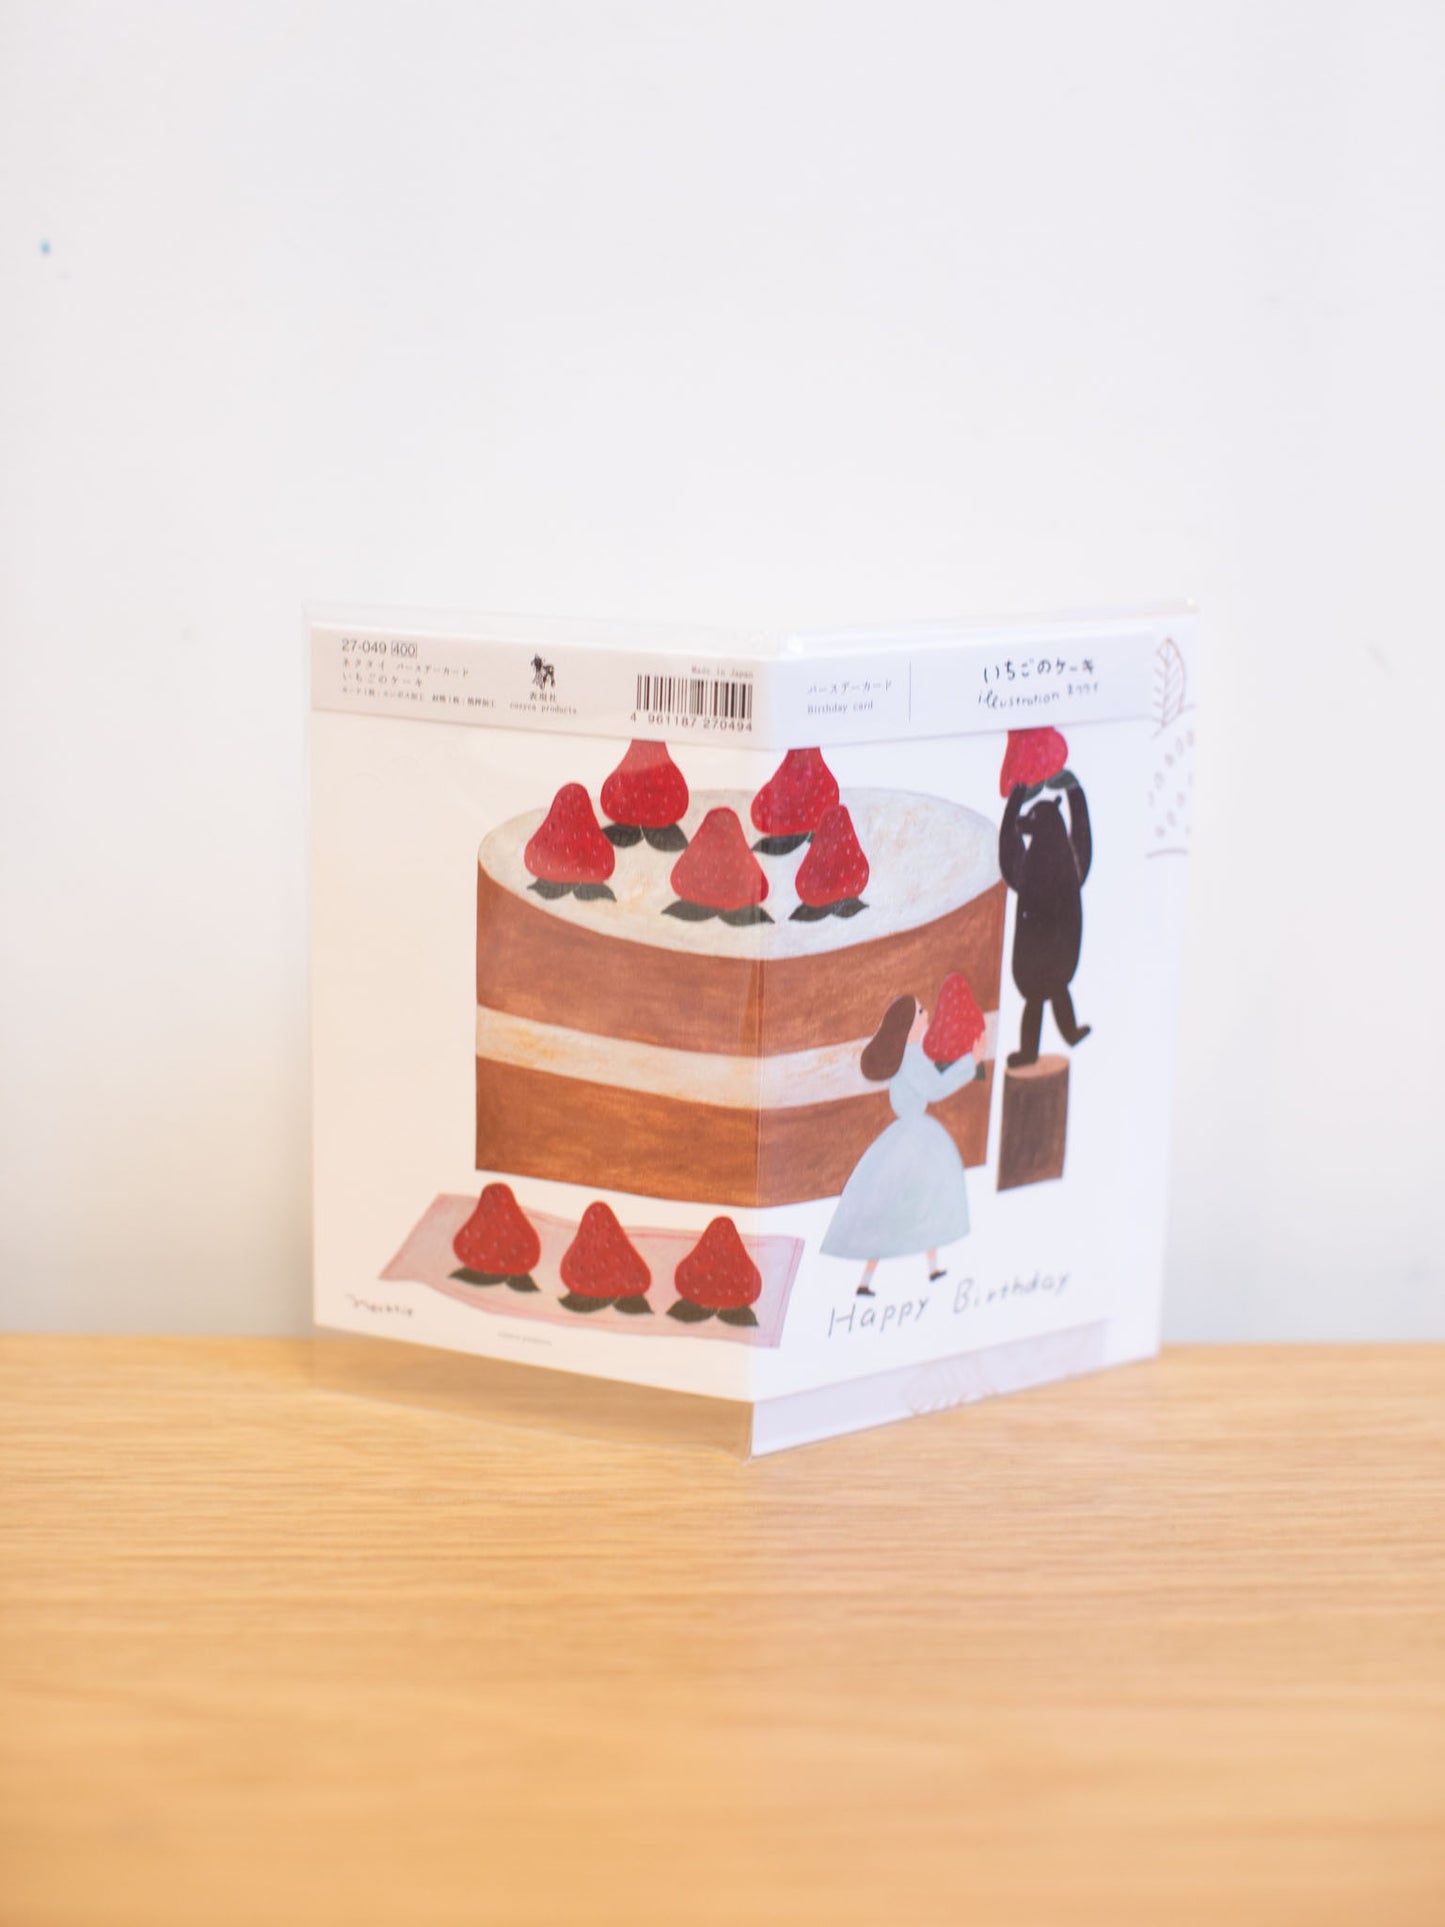 Necktie Birthday Card - Strawberry Cake